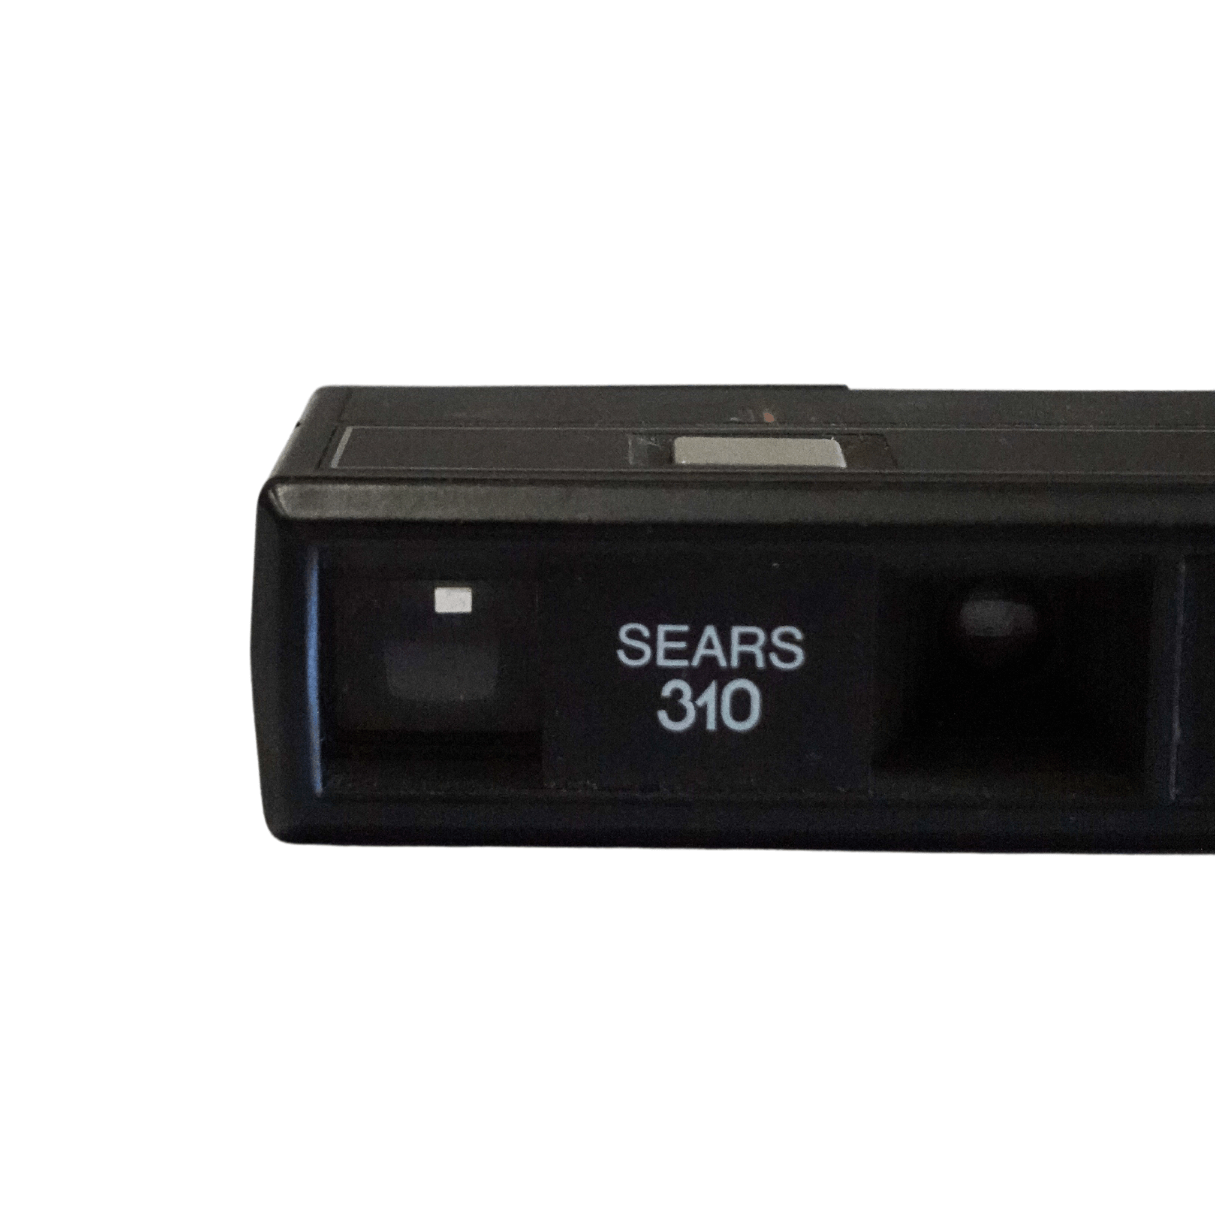 Câmera Sears 310 Compacta dos anos 1980 de Hong Kong